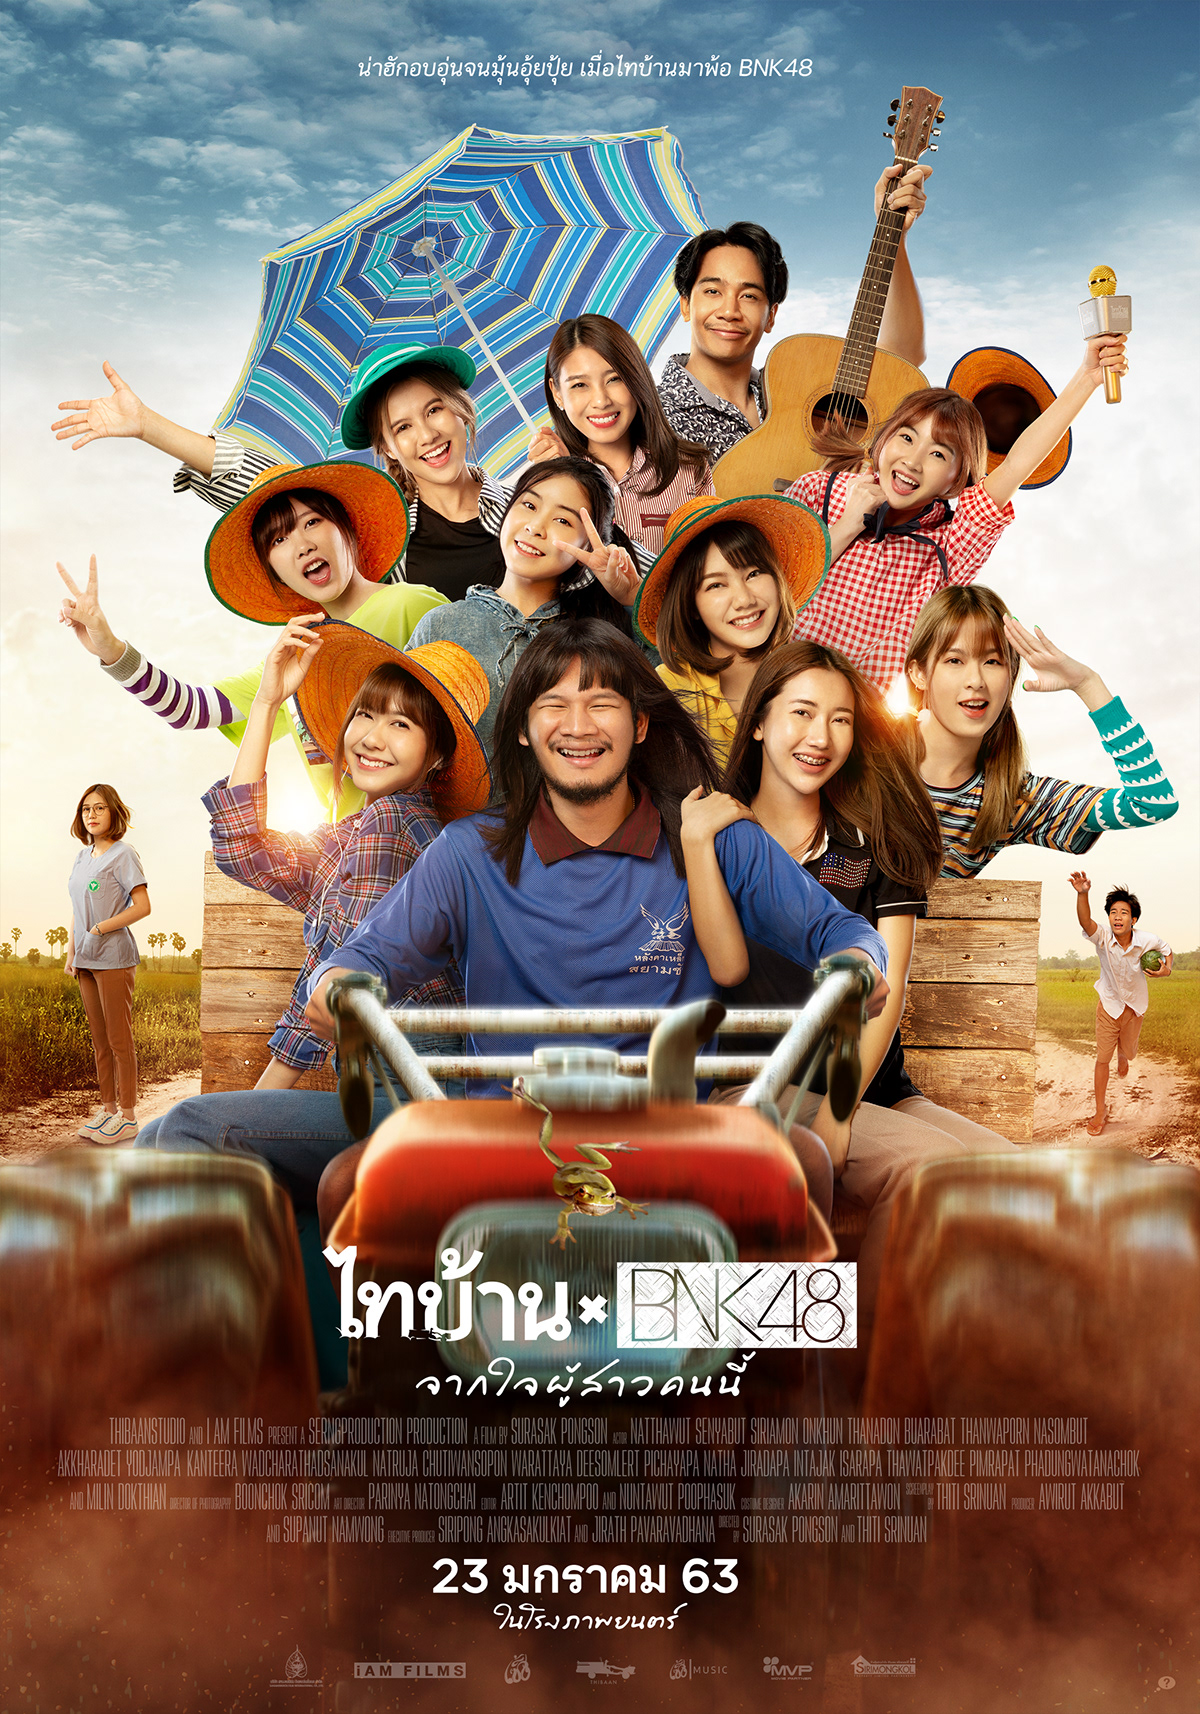 akb48 bnk48 farm keyart local movie music movie poster